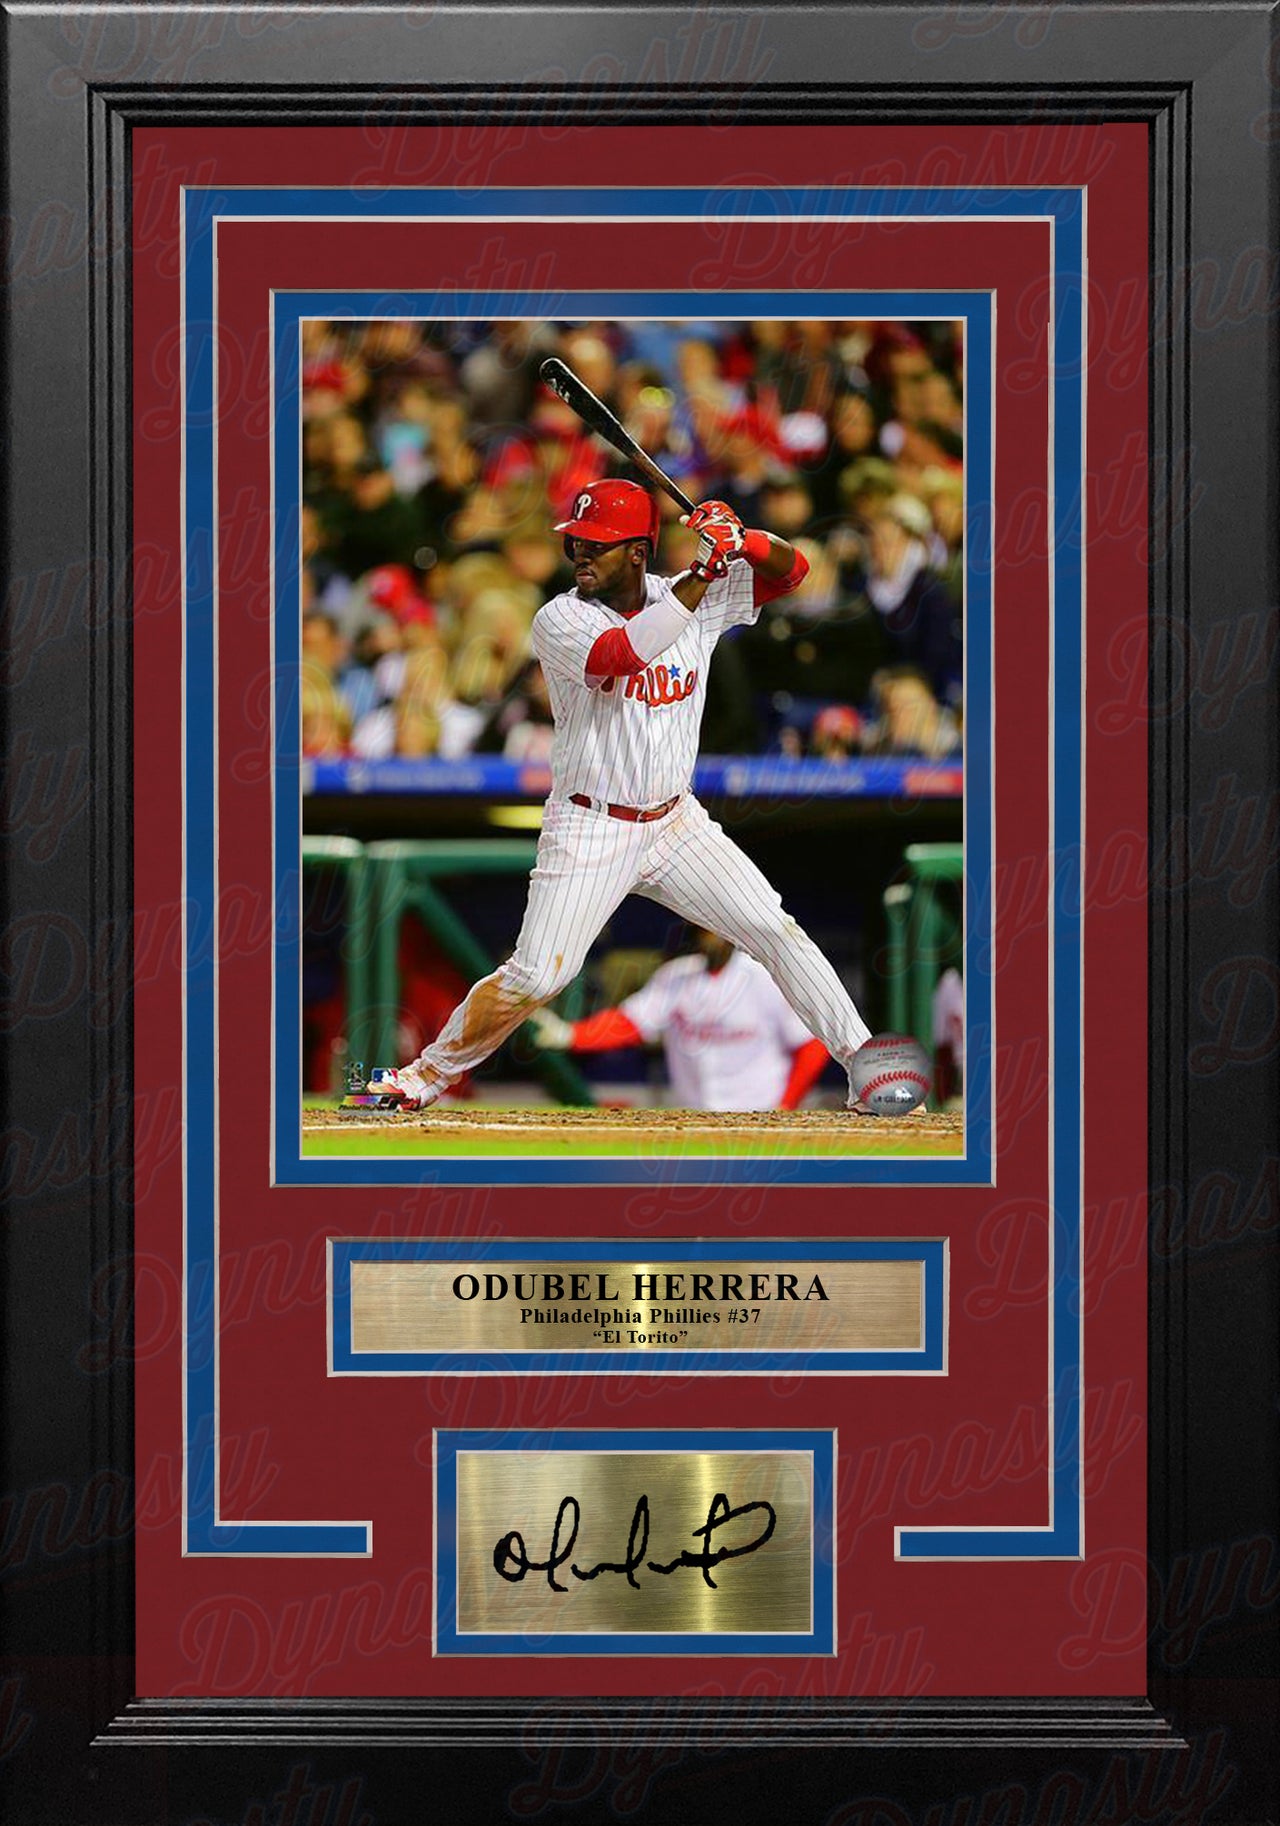 Odubel Herrera Philadelphia Phillies At-Bat MLB Baseball Framed Photo with Engraved Autograph - Dynasty Sports & Framing 